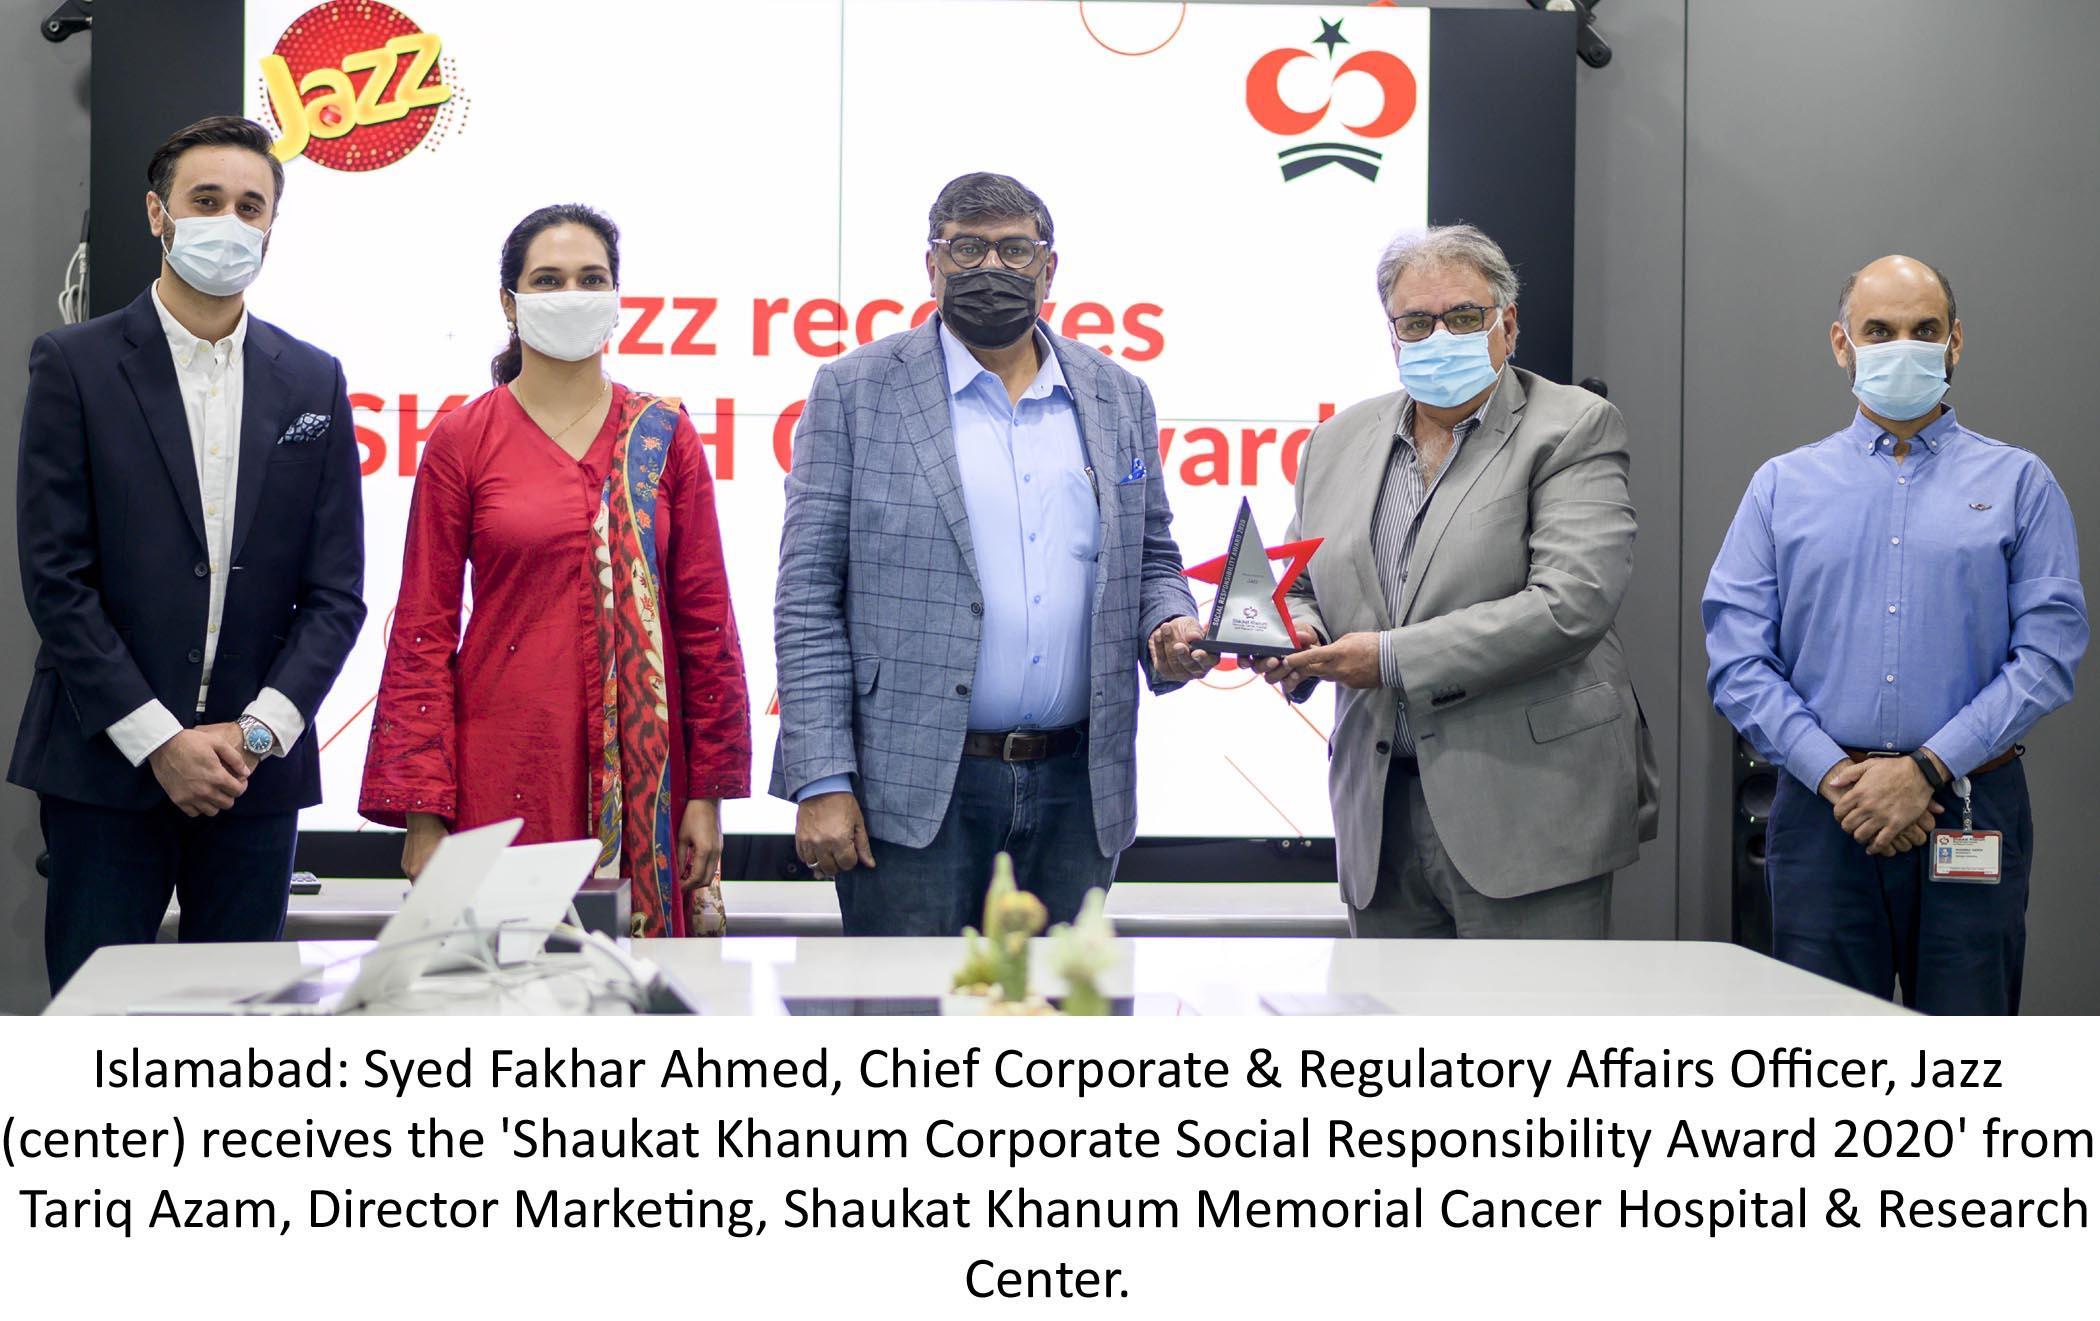 Jazz conferred with the Shaukat Khanum Corporate Social Responsibility Award 2020